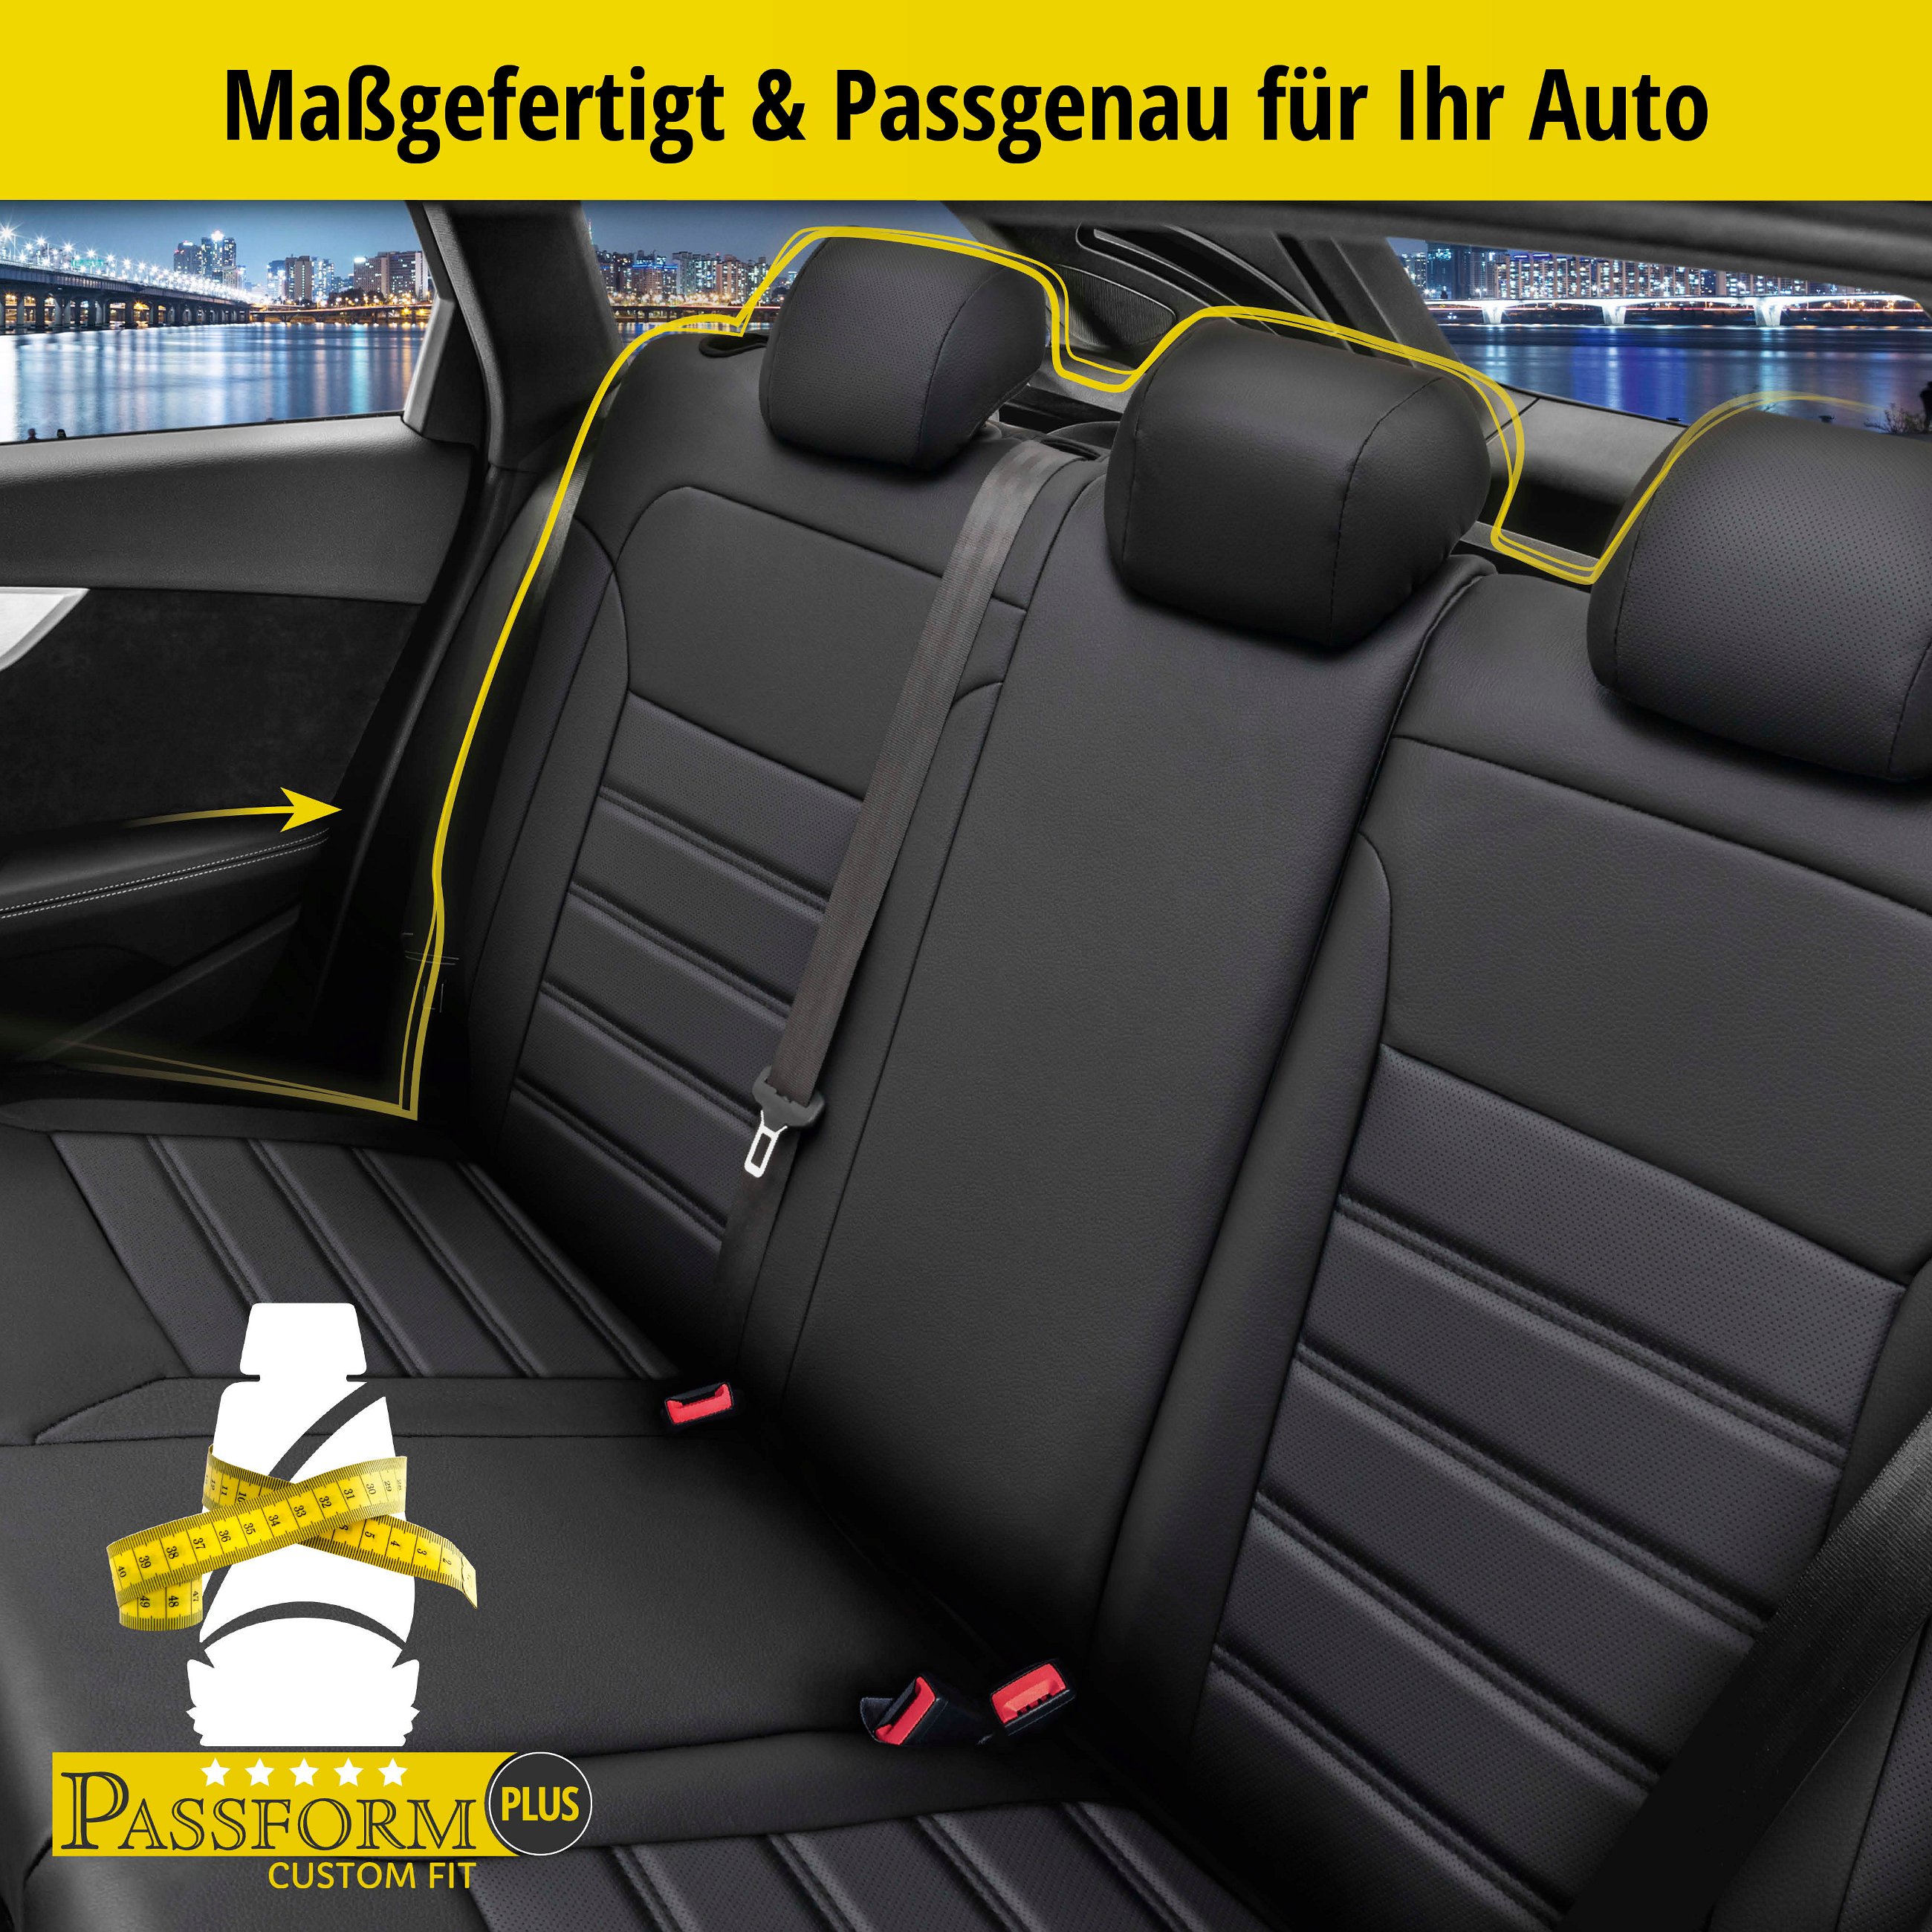 Passform Sitzbezug Robusto für VW Golf 7 Trendline 08/2012-Heute, 1 Rücksitzbankbezug für Normalsitze